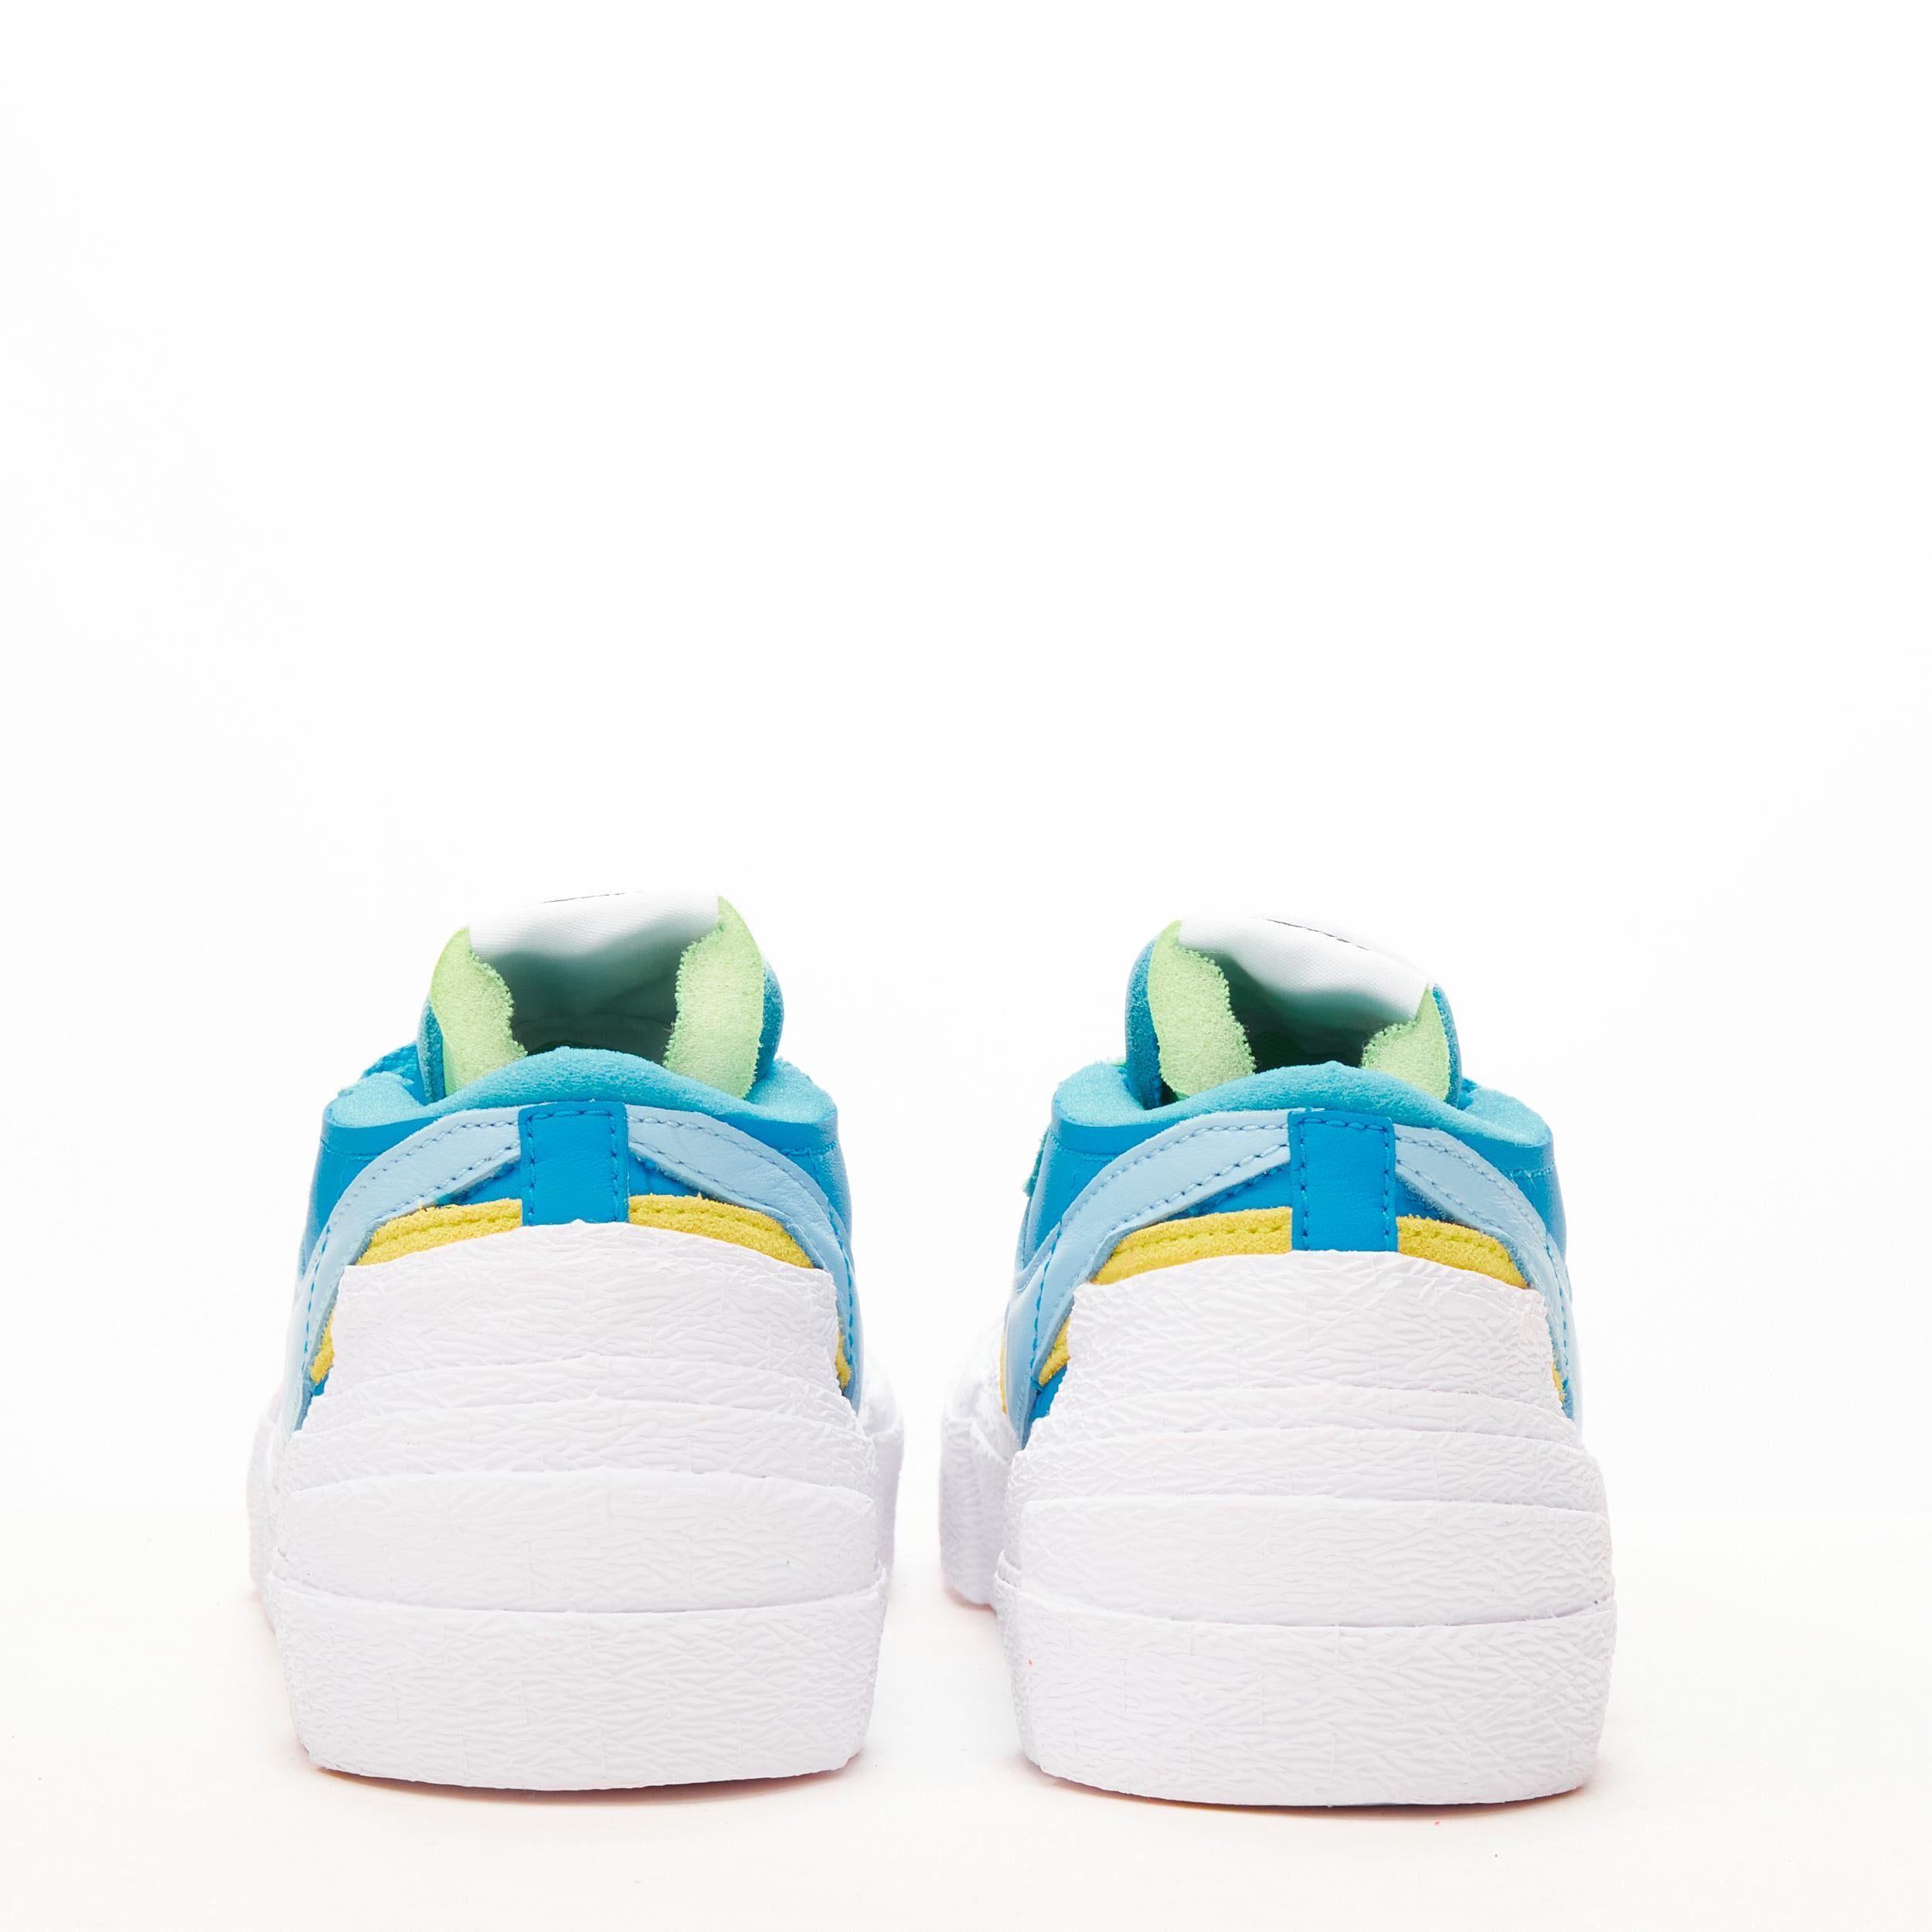 Women's new SACAI KAWS Nike Blazer Low neptune blue mid sneaker EU5 EU37.5 DM7901 400 For Sale